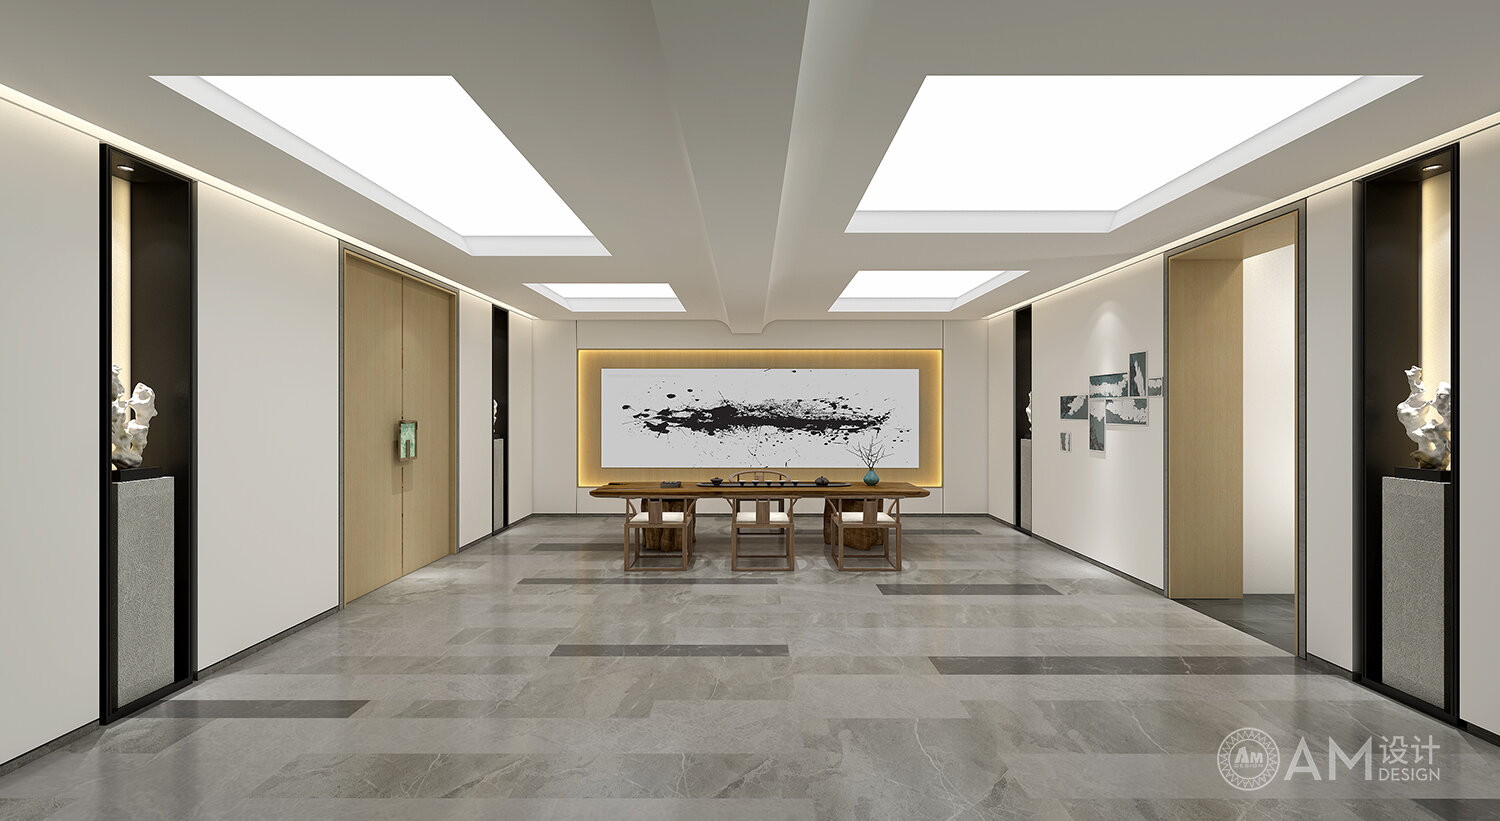 AM DESIGN | Design of private club Hall of Friendship Hotel